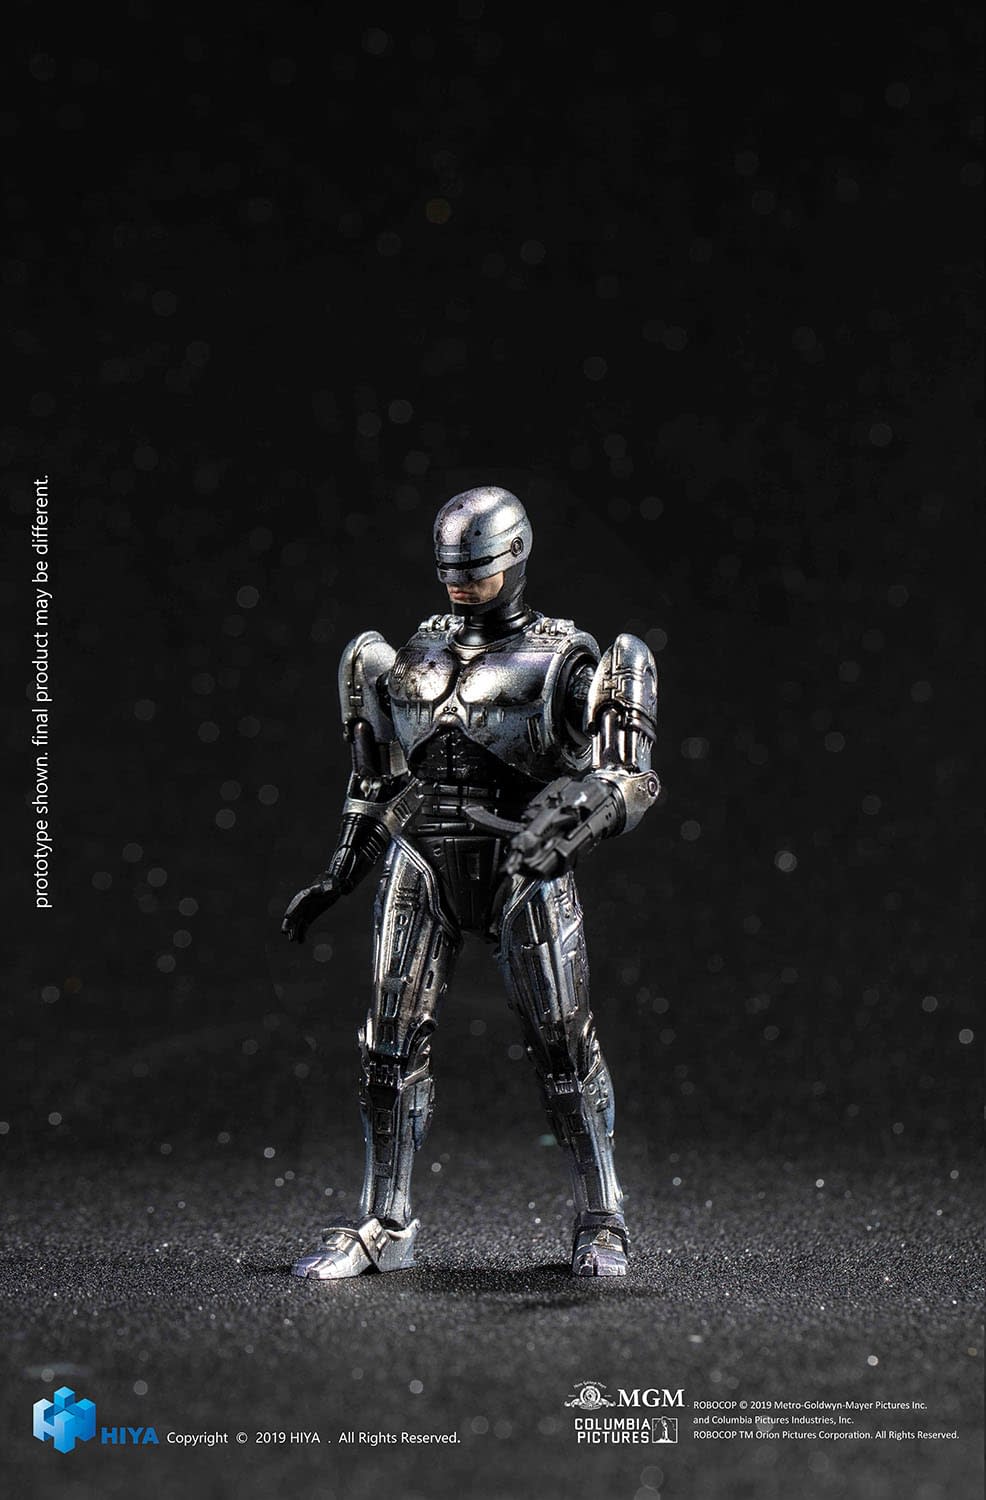 Robocop Comes Back with More Pex Exclusive Figures